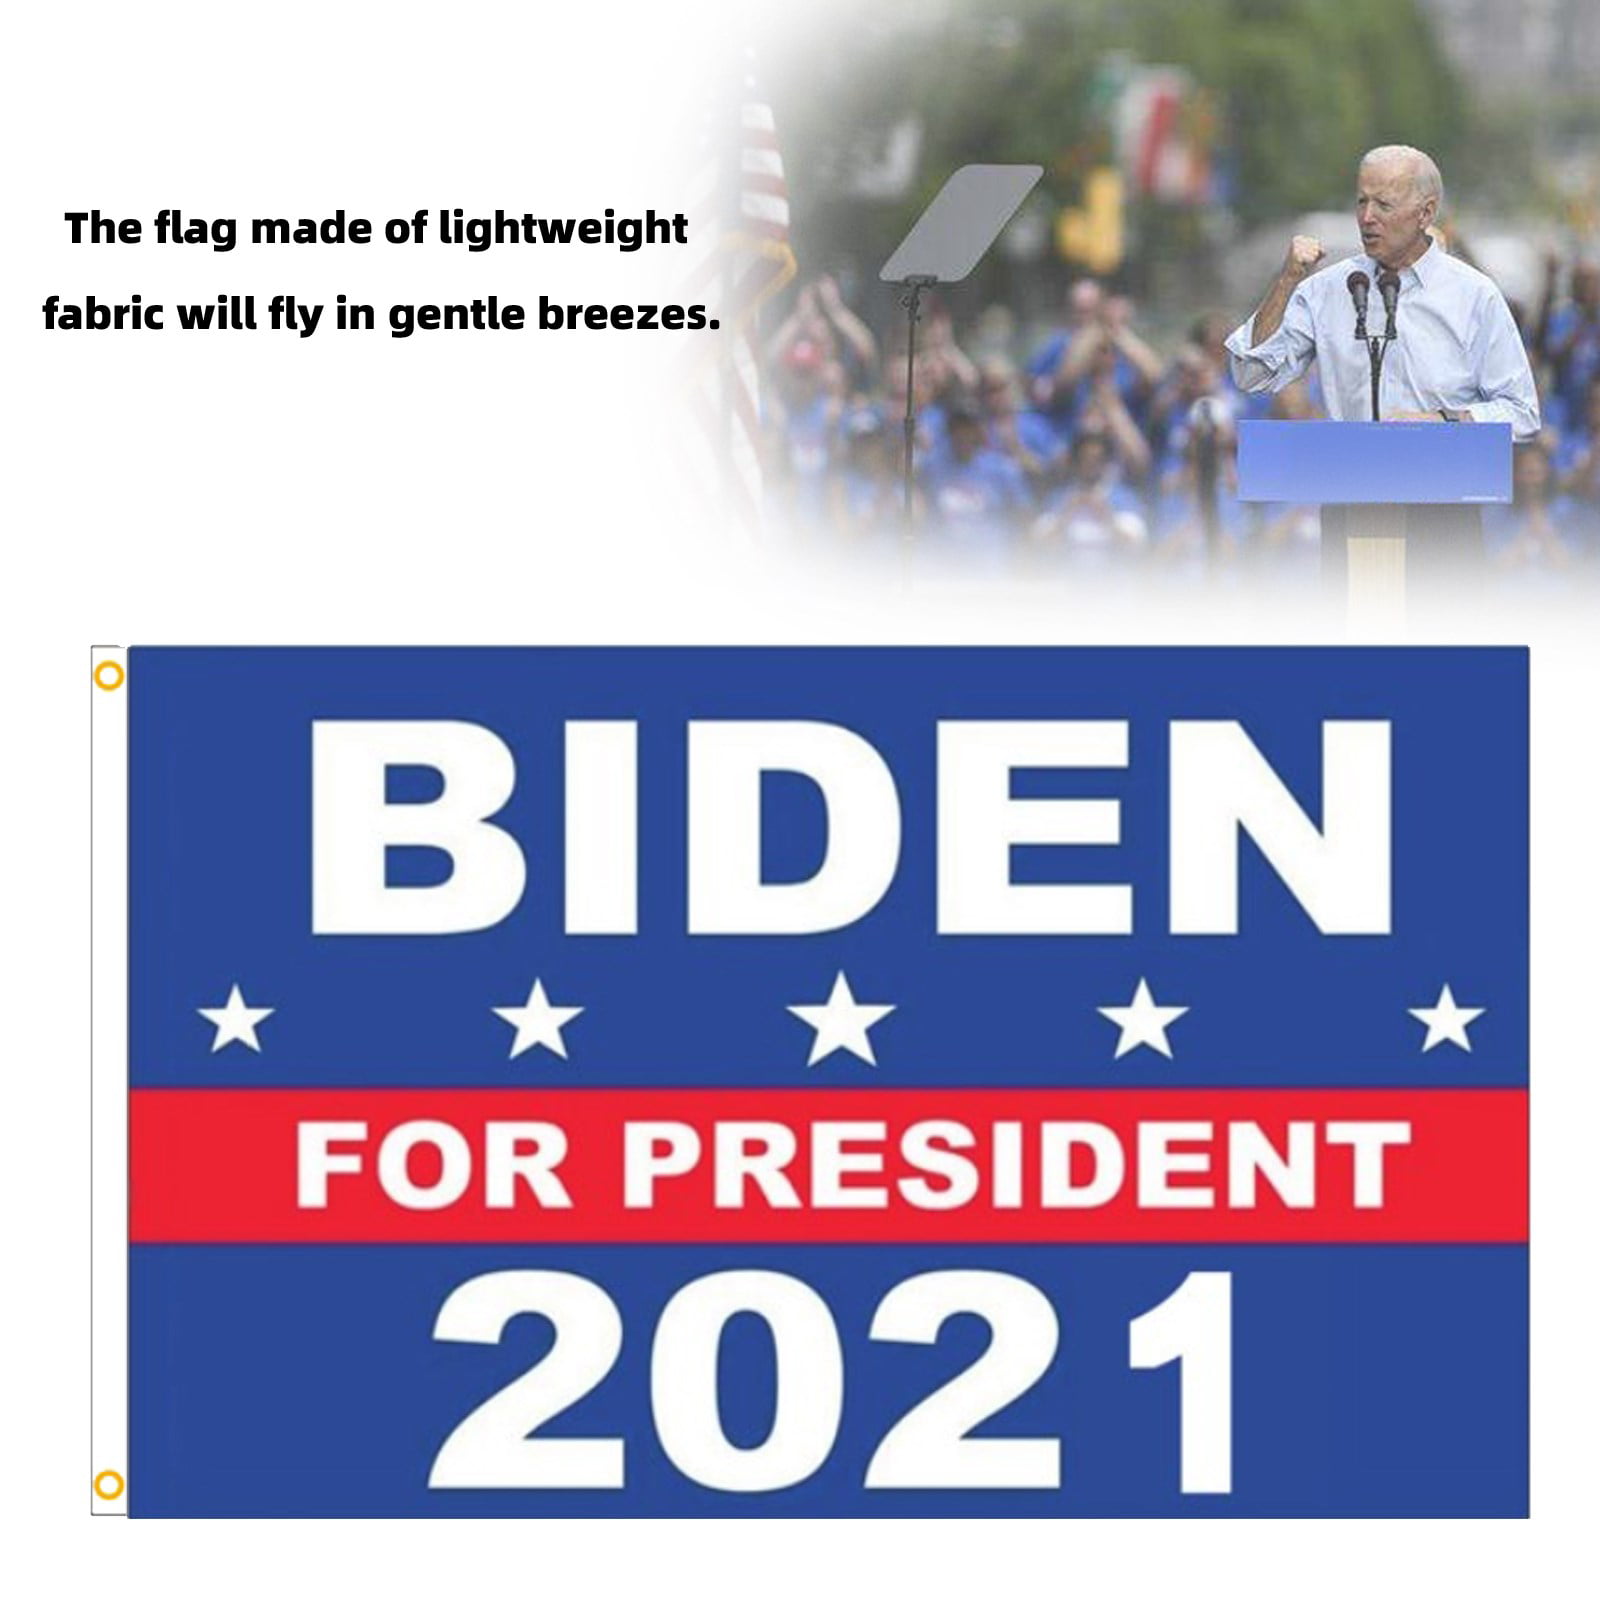 2020 Joe Biden Flag elect president 3'x5' with 2 Brass Grommets Blue Big Sale LO 